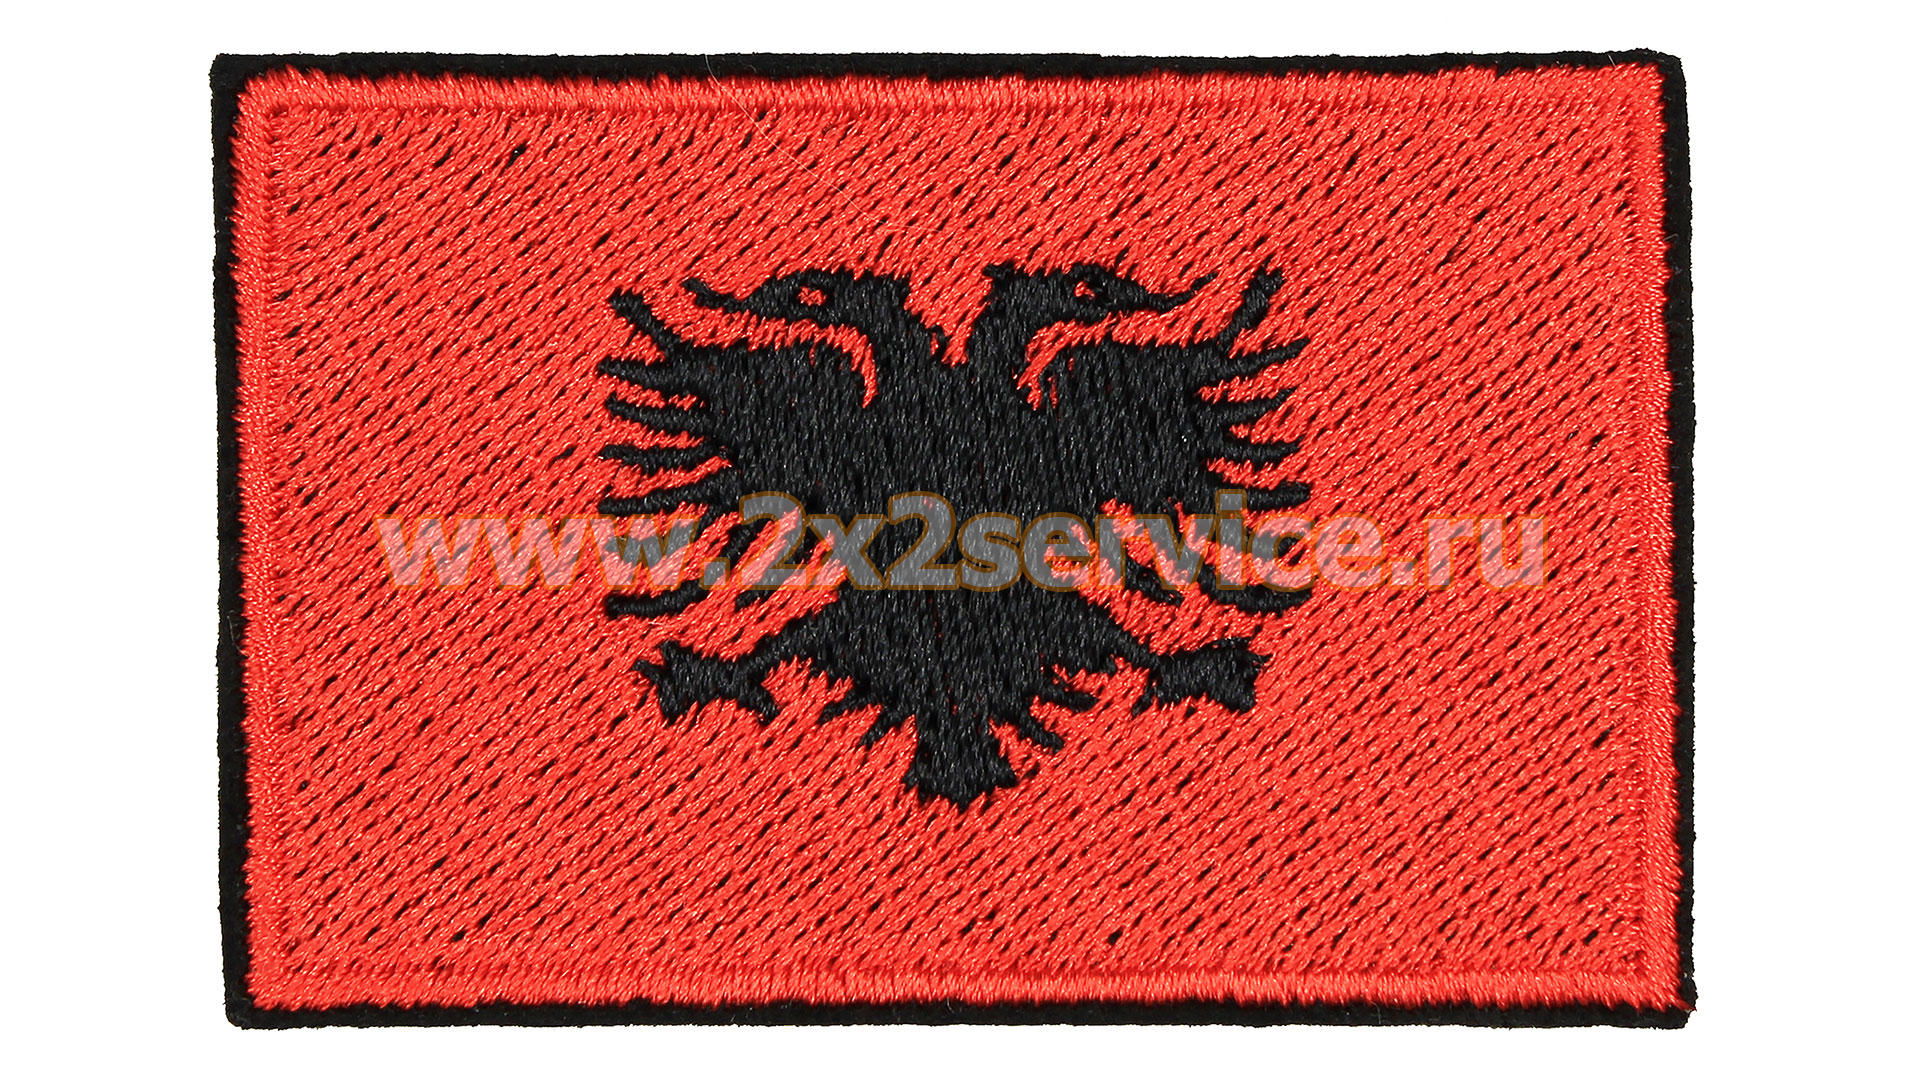 Нашивка, патч, шеврон "Флаг Албании" 60x40mm PTC281